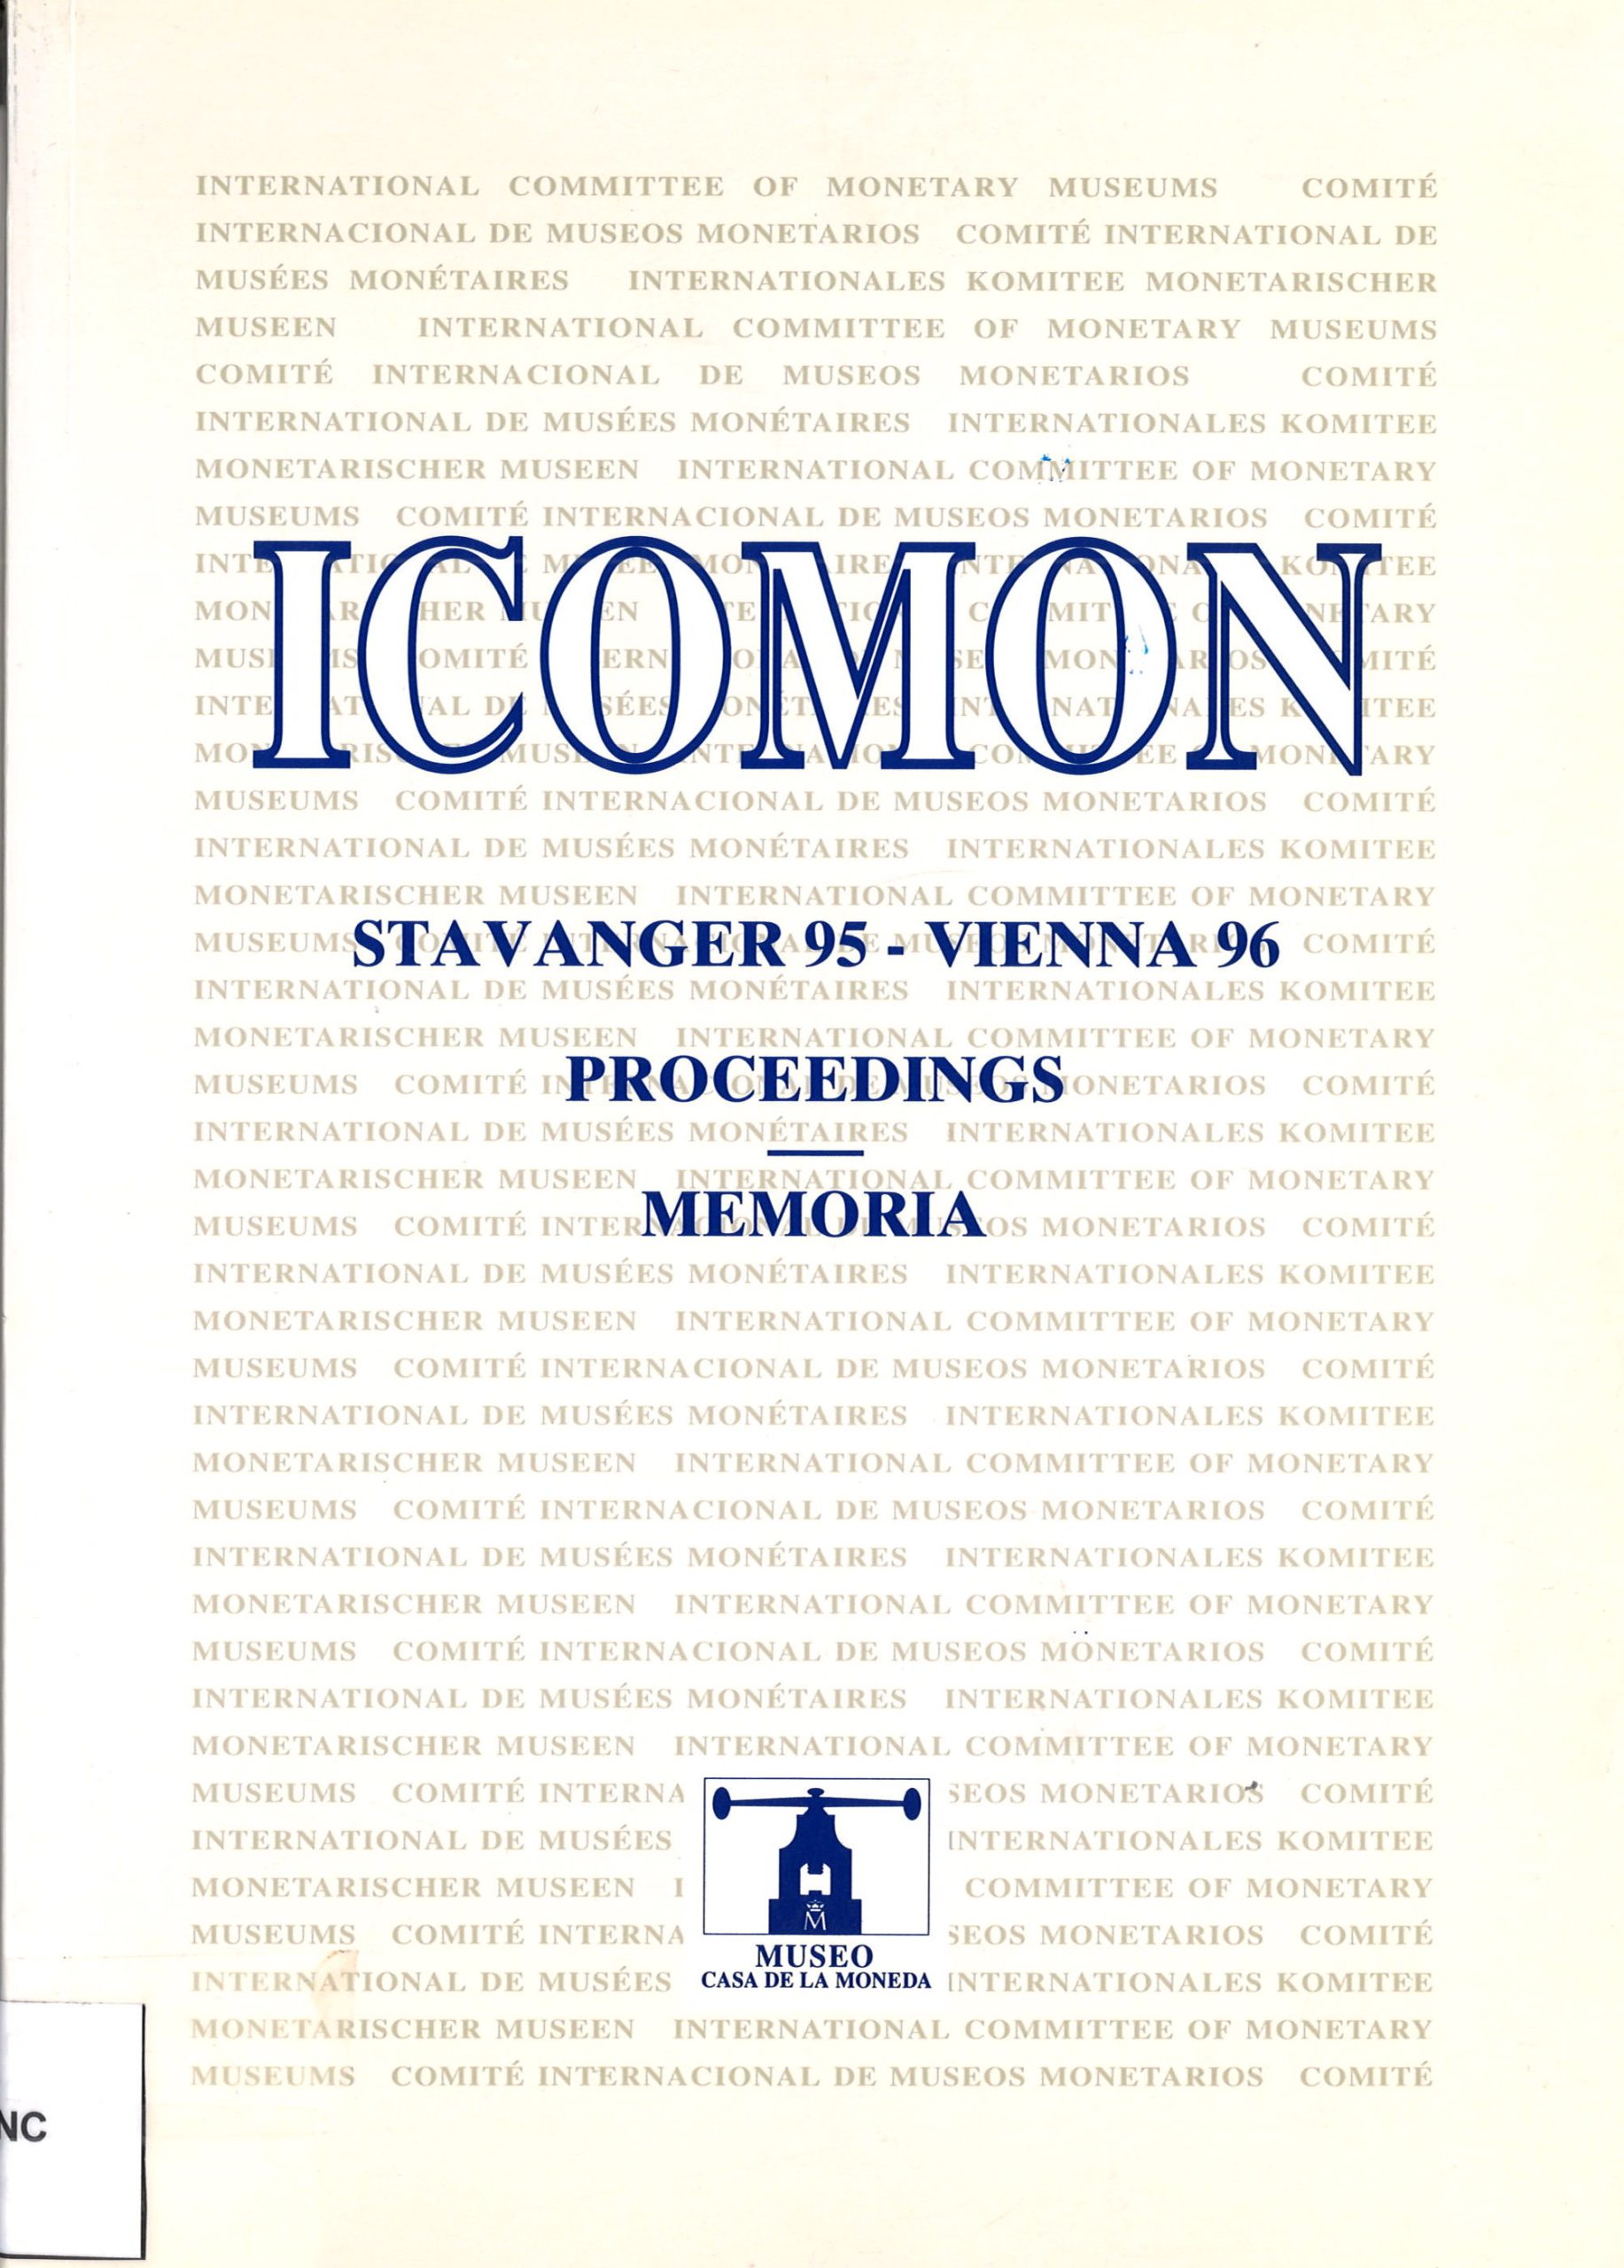 ICOMON. Stavanger 95 - Vienna 96. Proceedings. Memoria-image